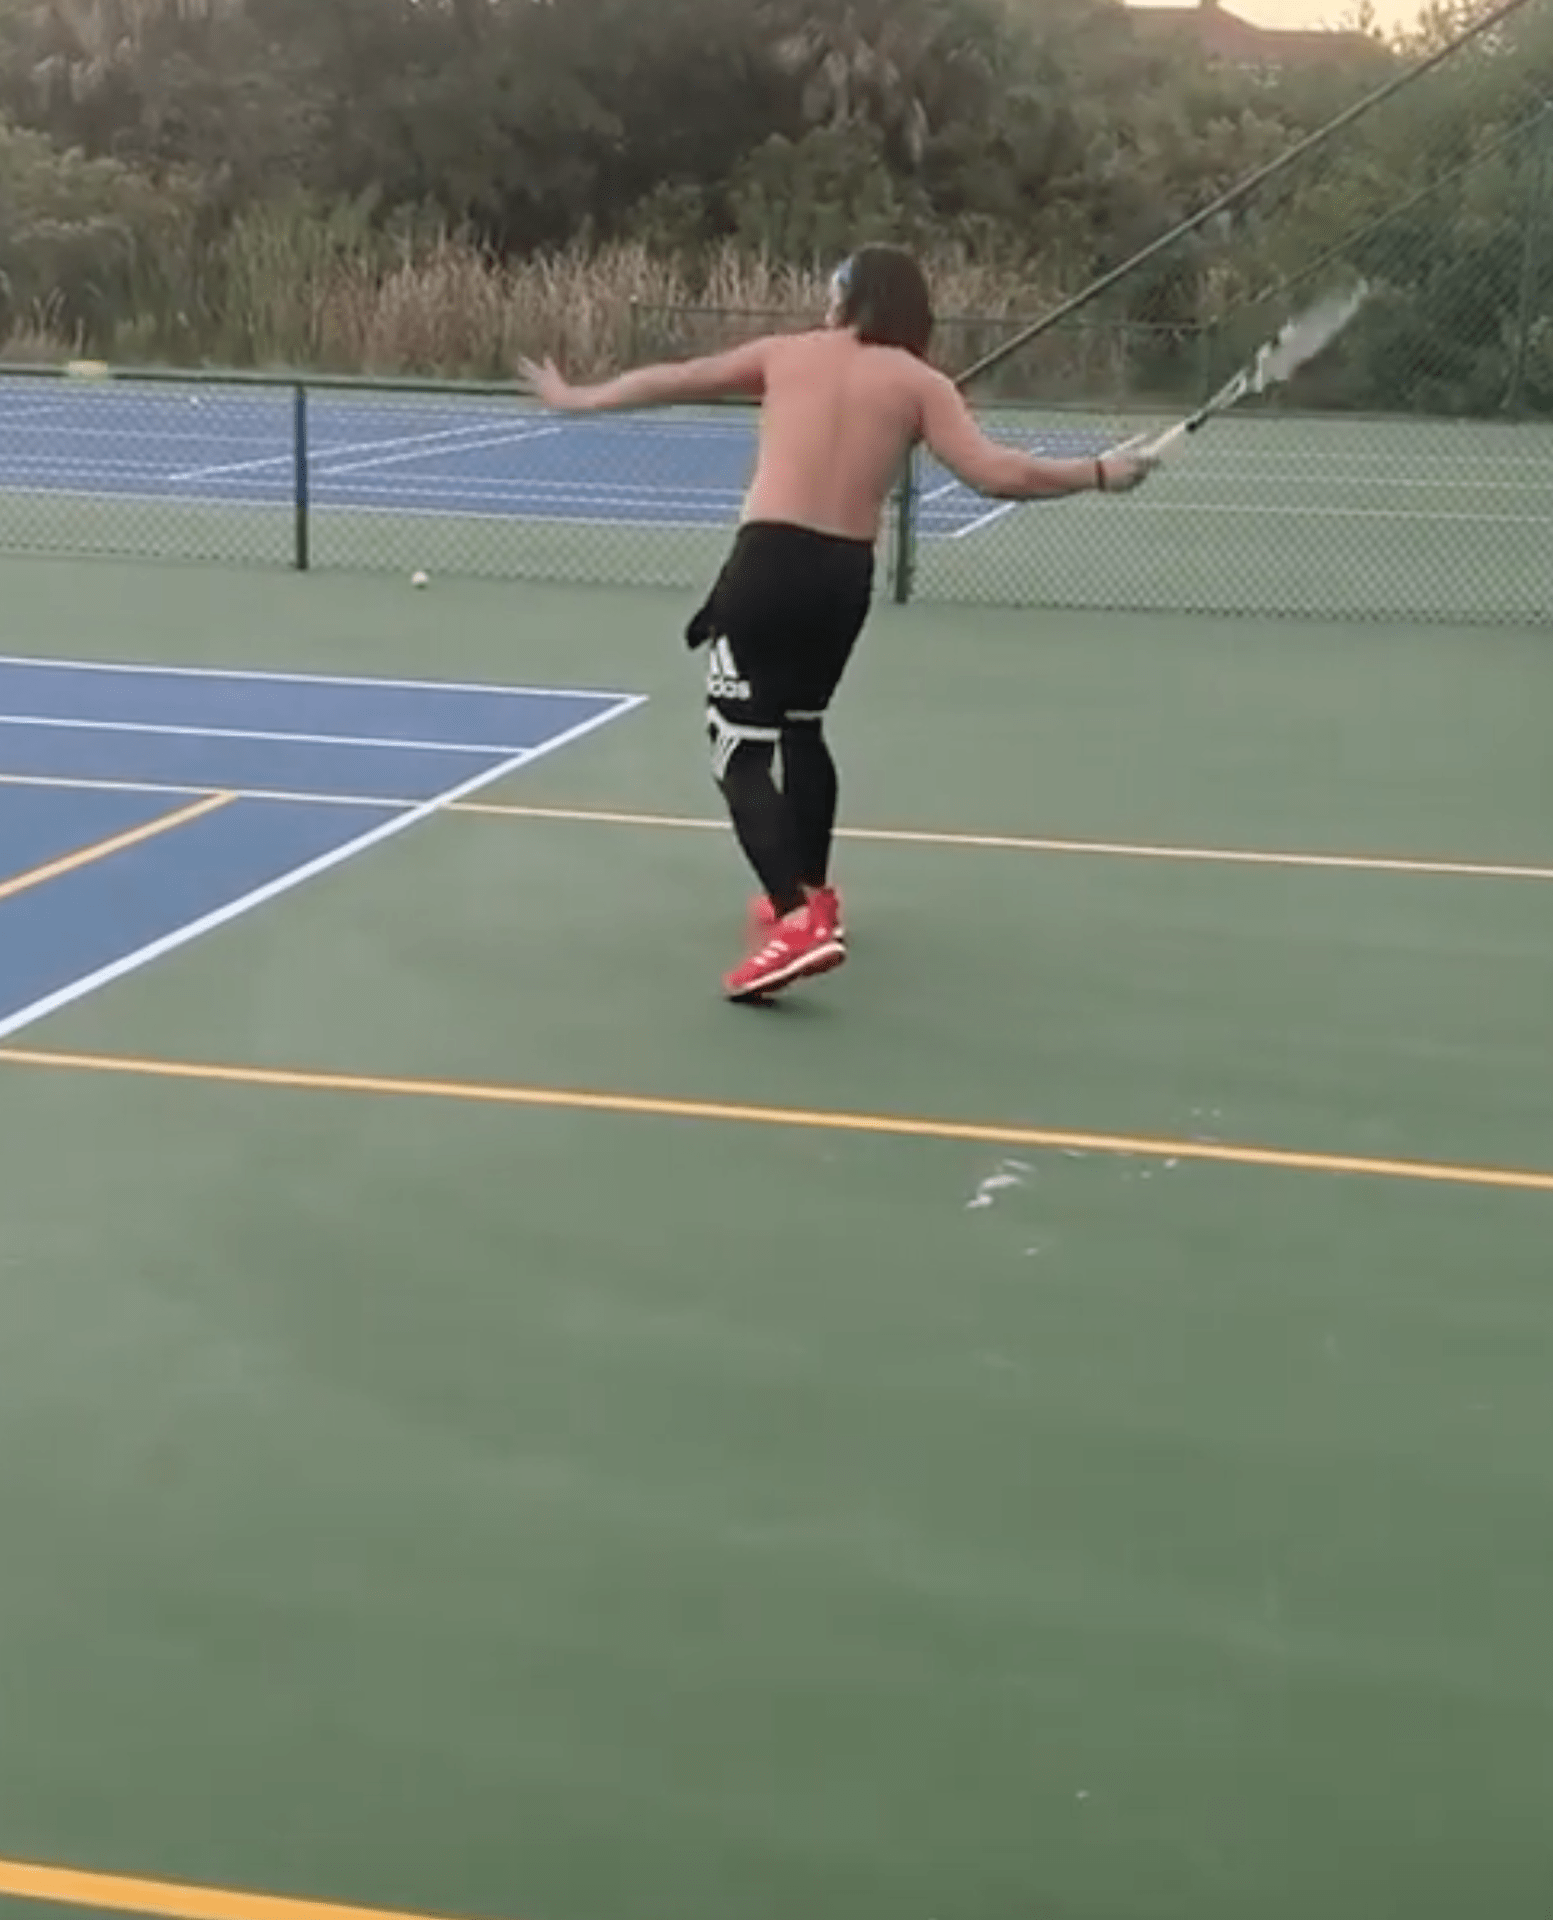 WATCH: Bluejays Bo Bichette shows off tennis skills